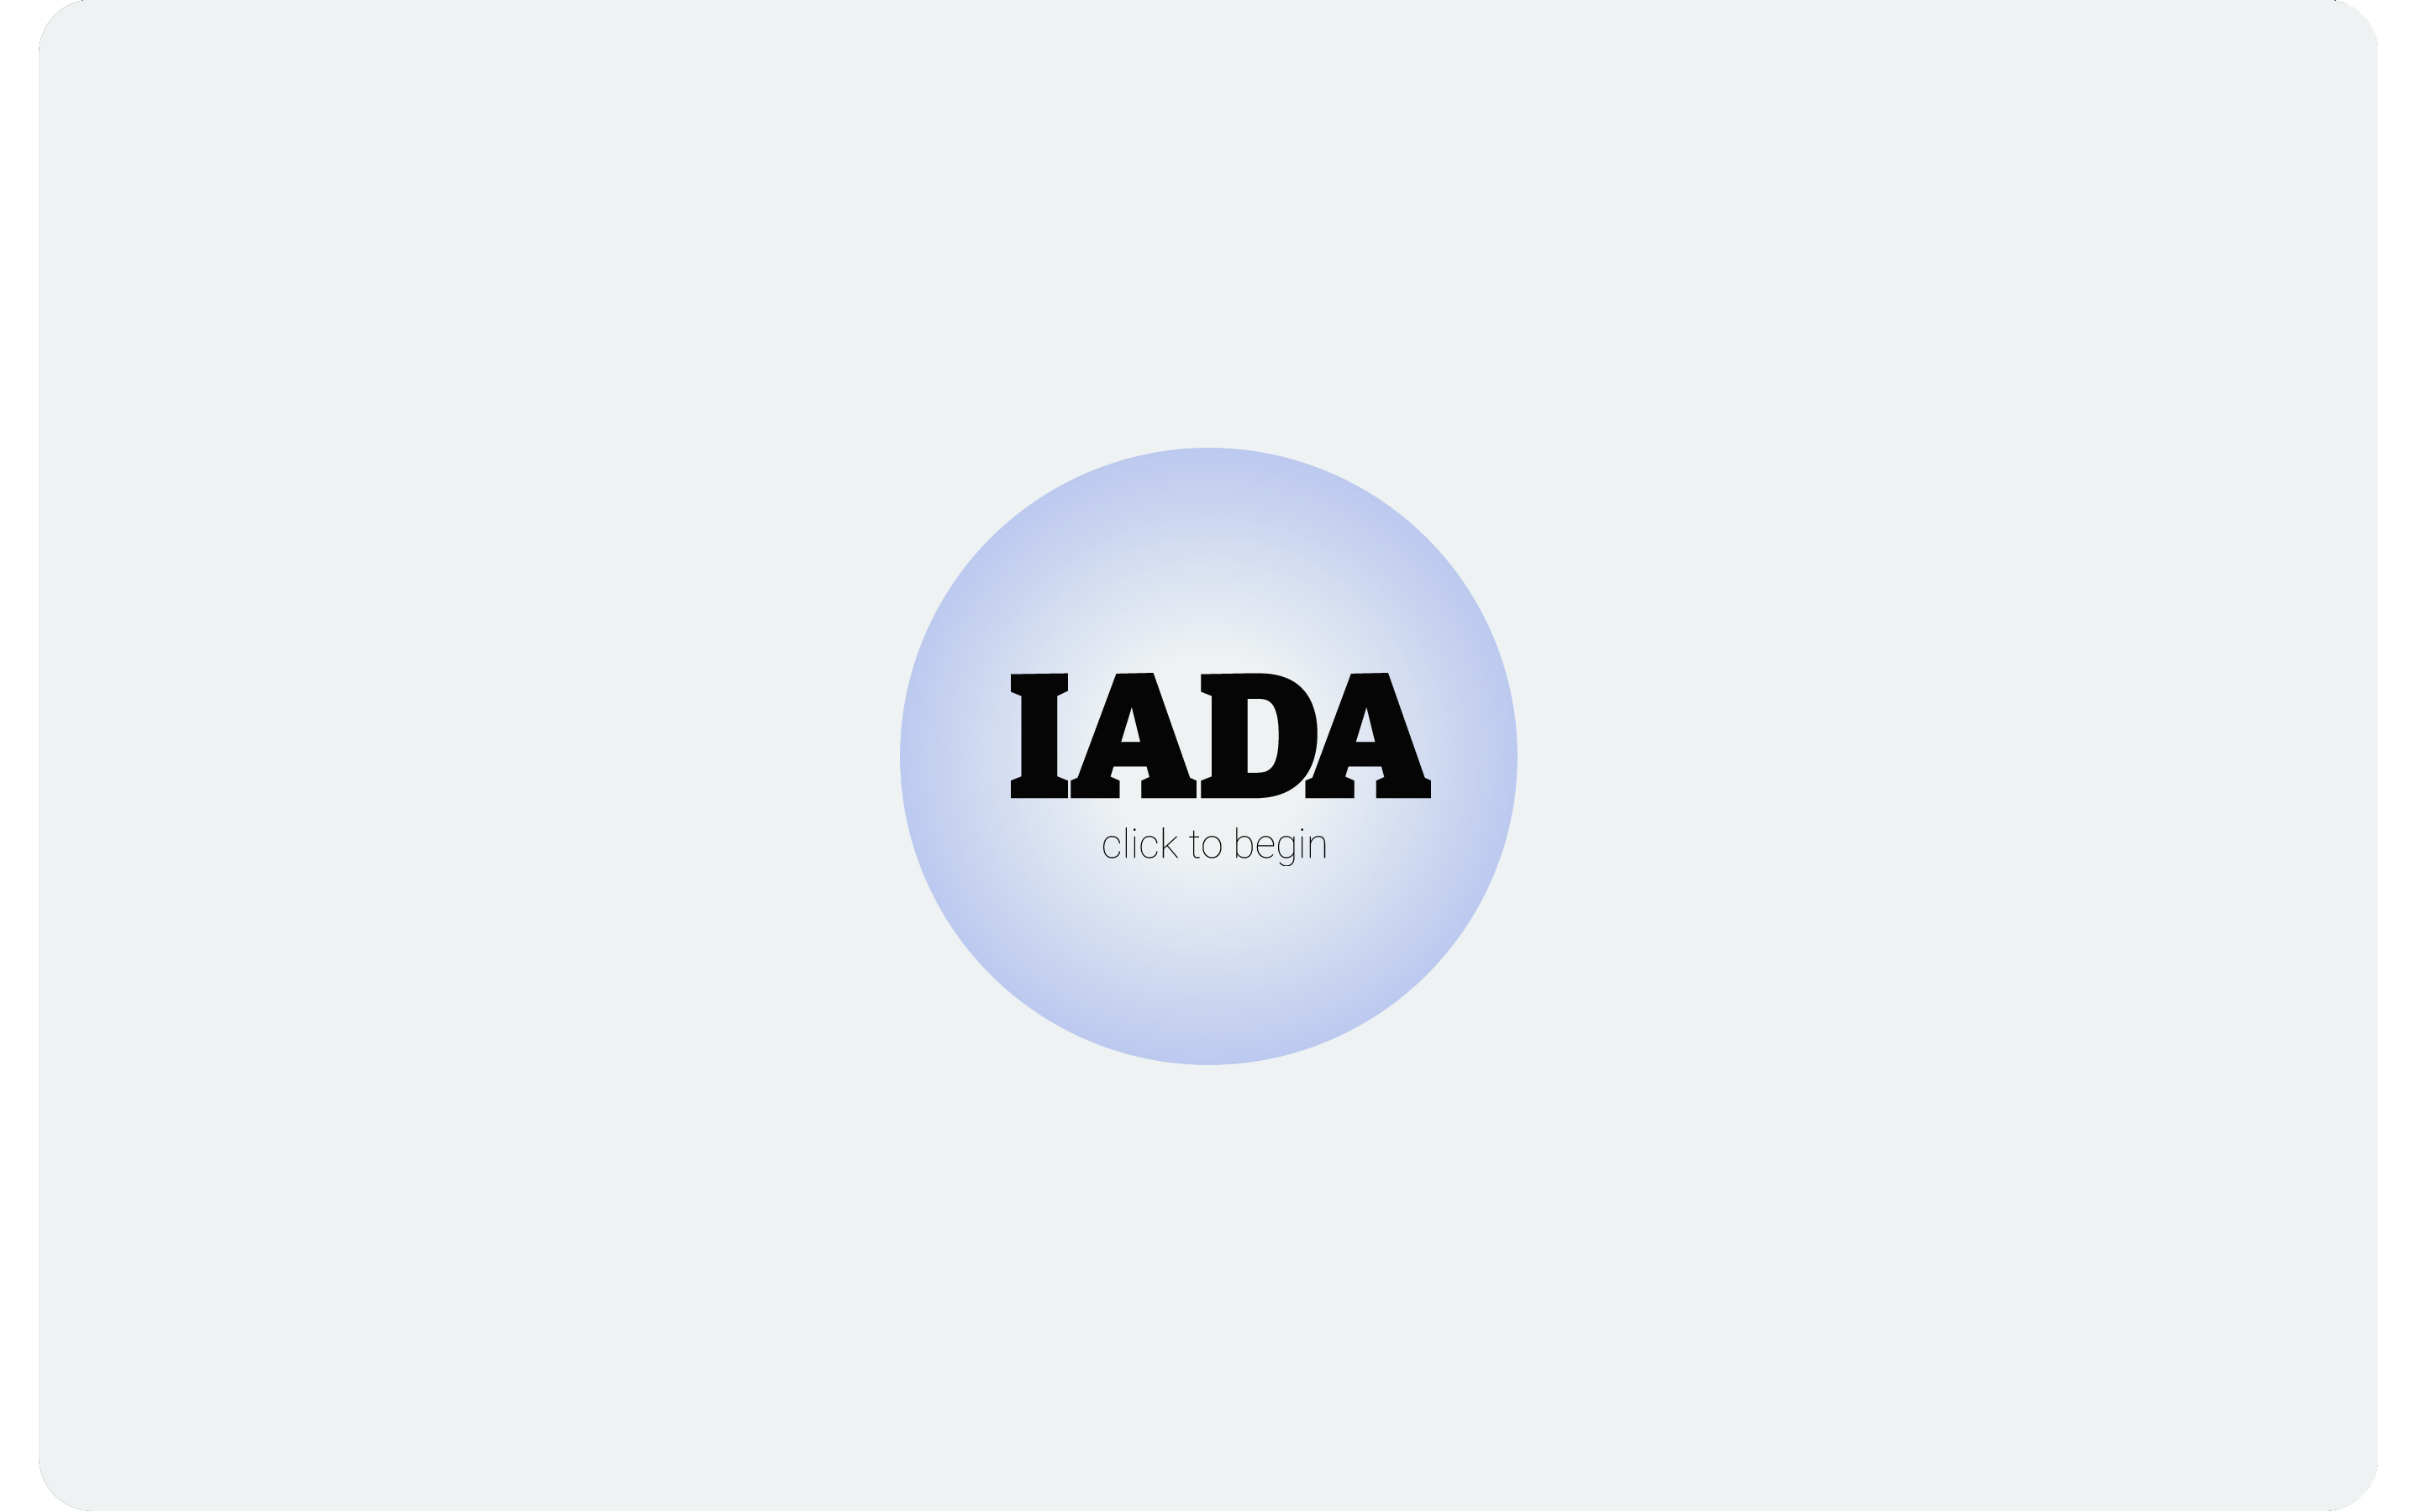 IADA introductory screen